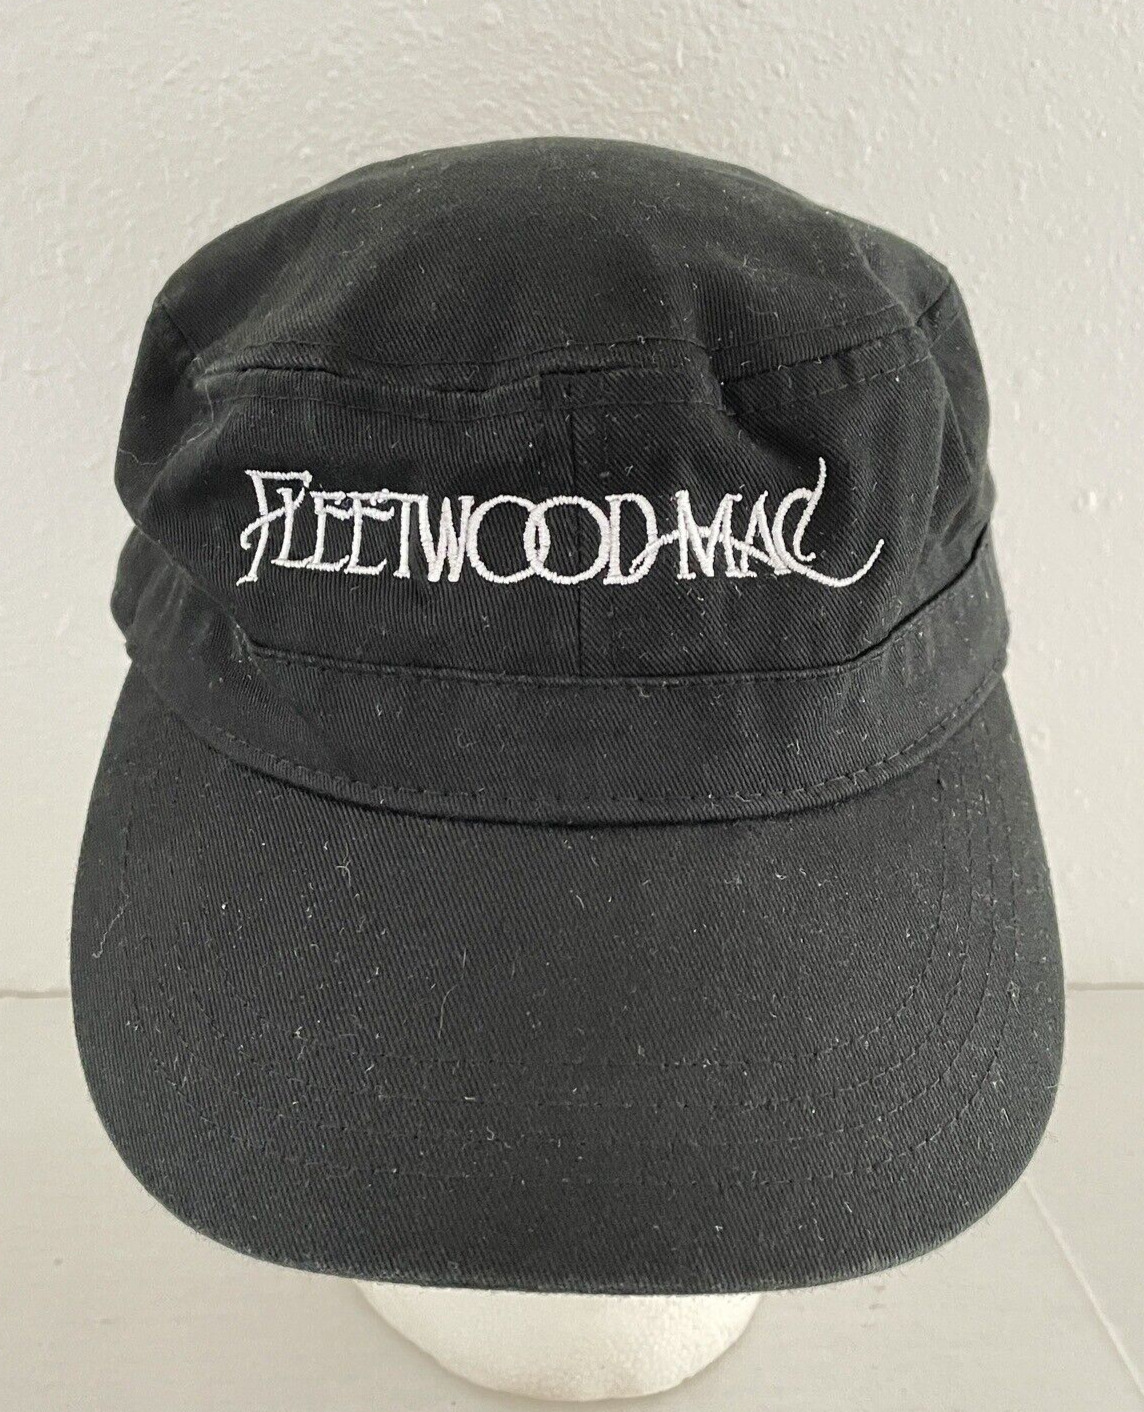 Fleetwood Mac Live 2013 Tour Painter's Cap Black Hat Adjustable Band OSFA